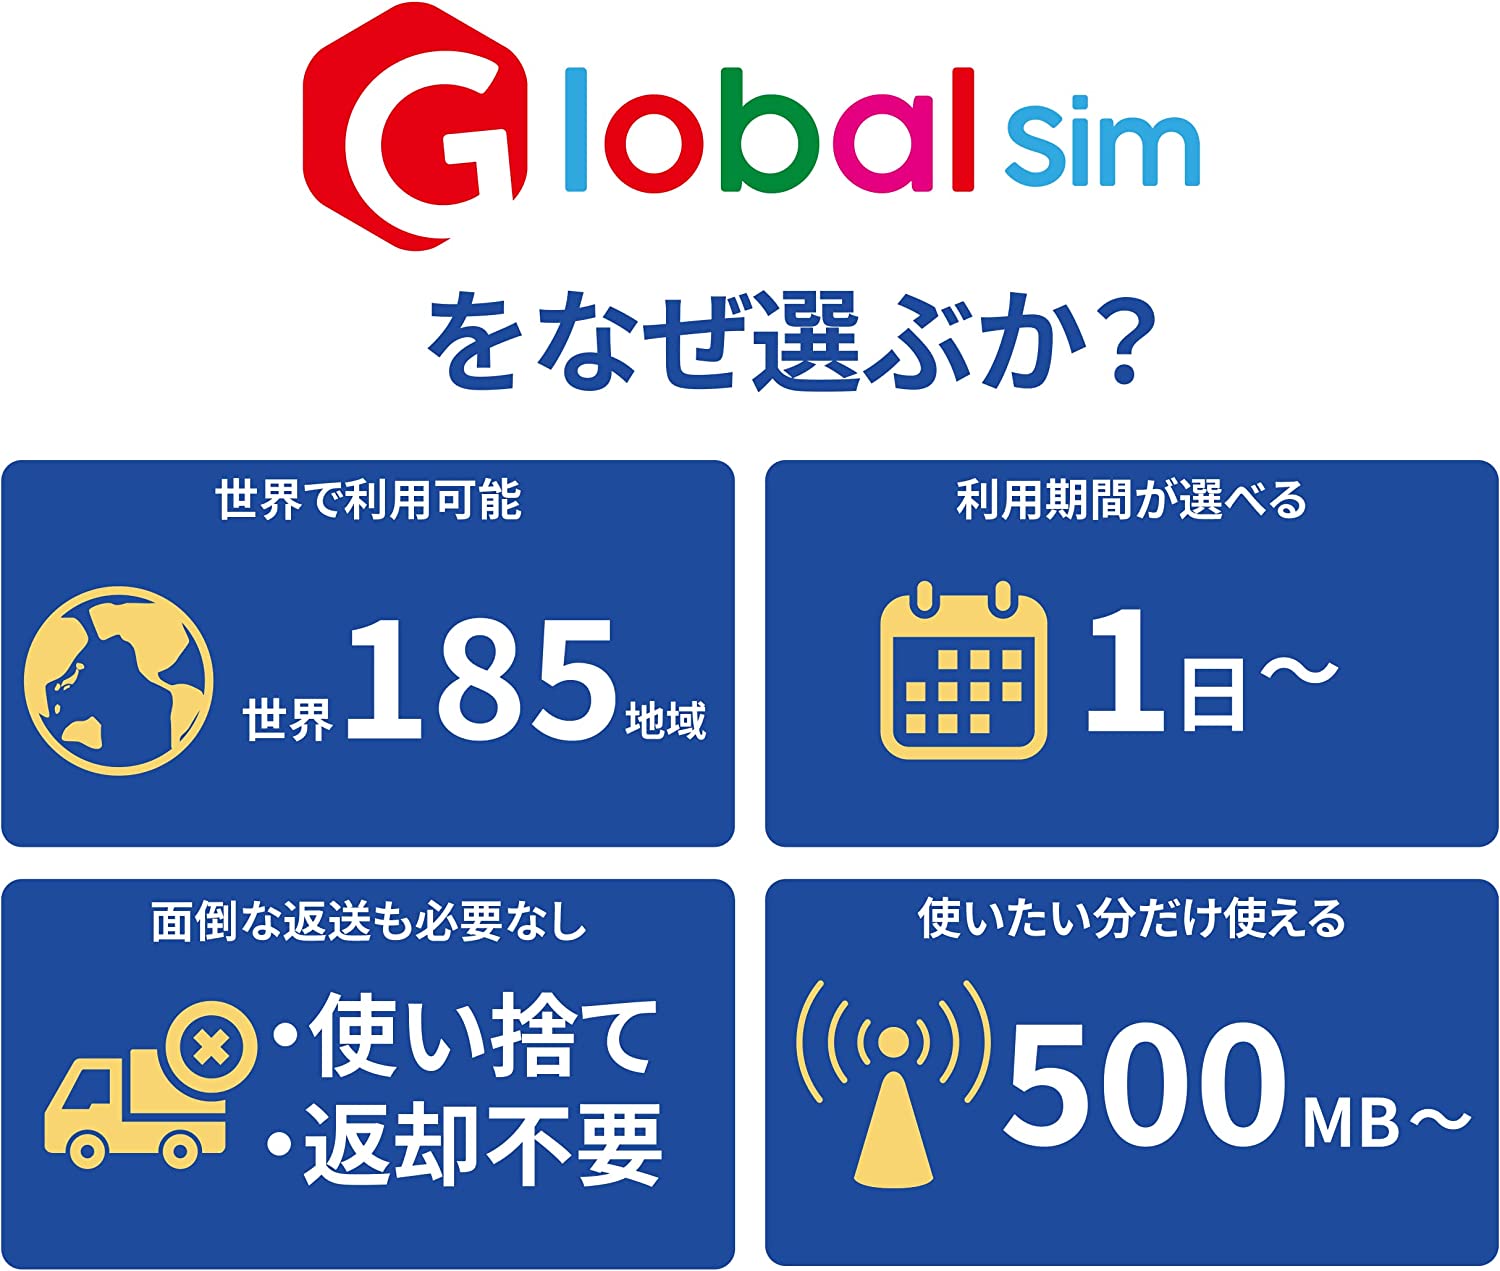 GLOBAL SIM ハワイ アメリカ カナダ 7日間 データ無制限 (500MB 日高速）（容量を使い切っても利用期間内は最大384kbps） データ通信専用 シムフリー端末のみ対応 追加費用なし・契約不要